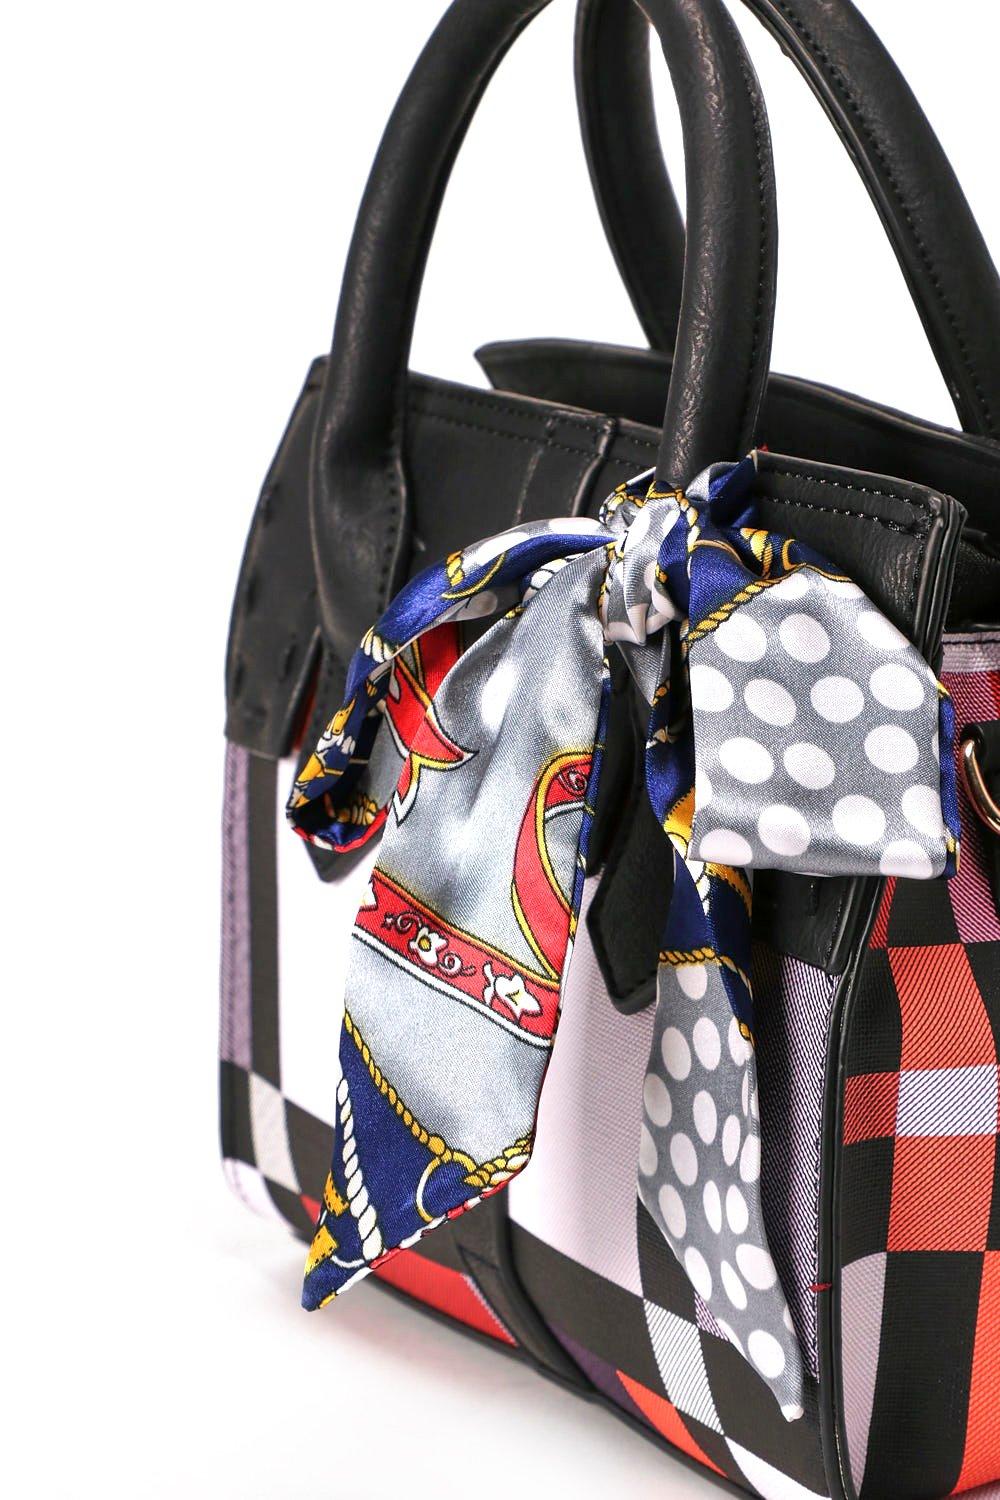 How To Tie Scarf On Handbag 